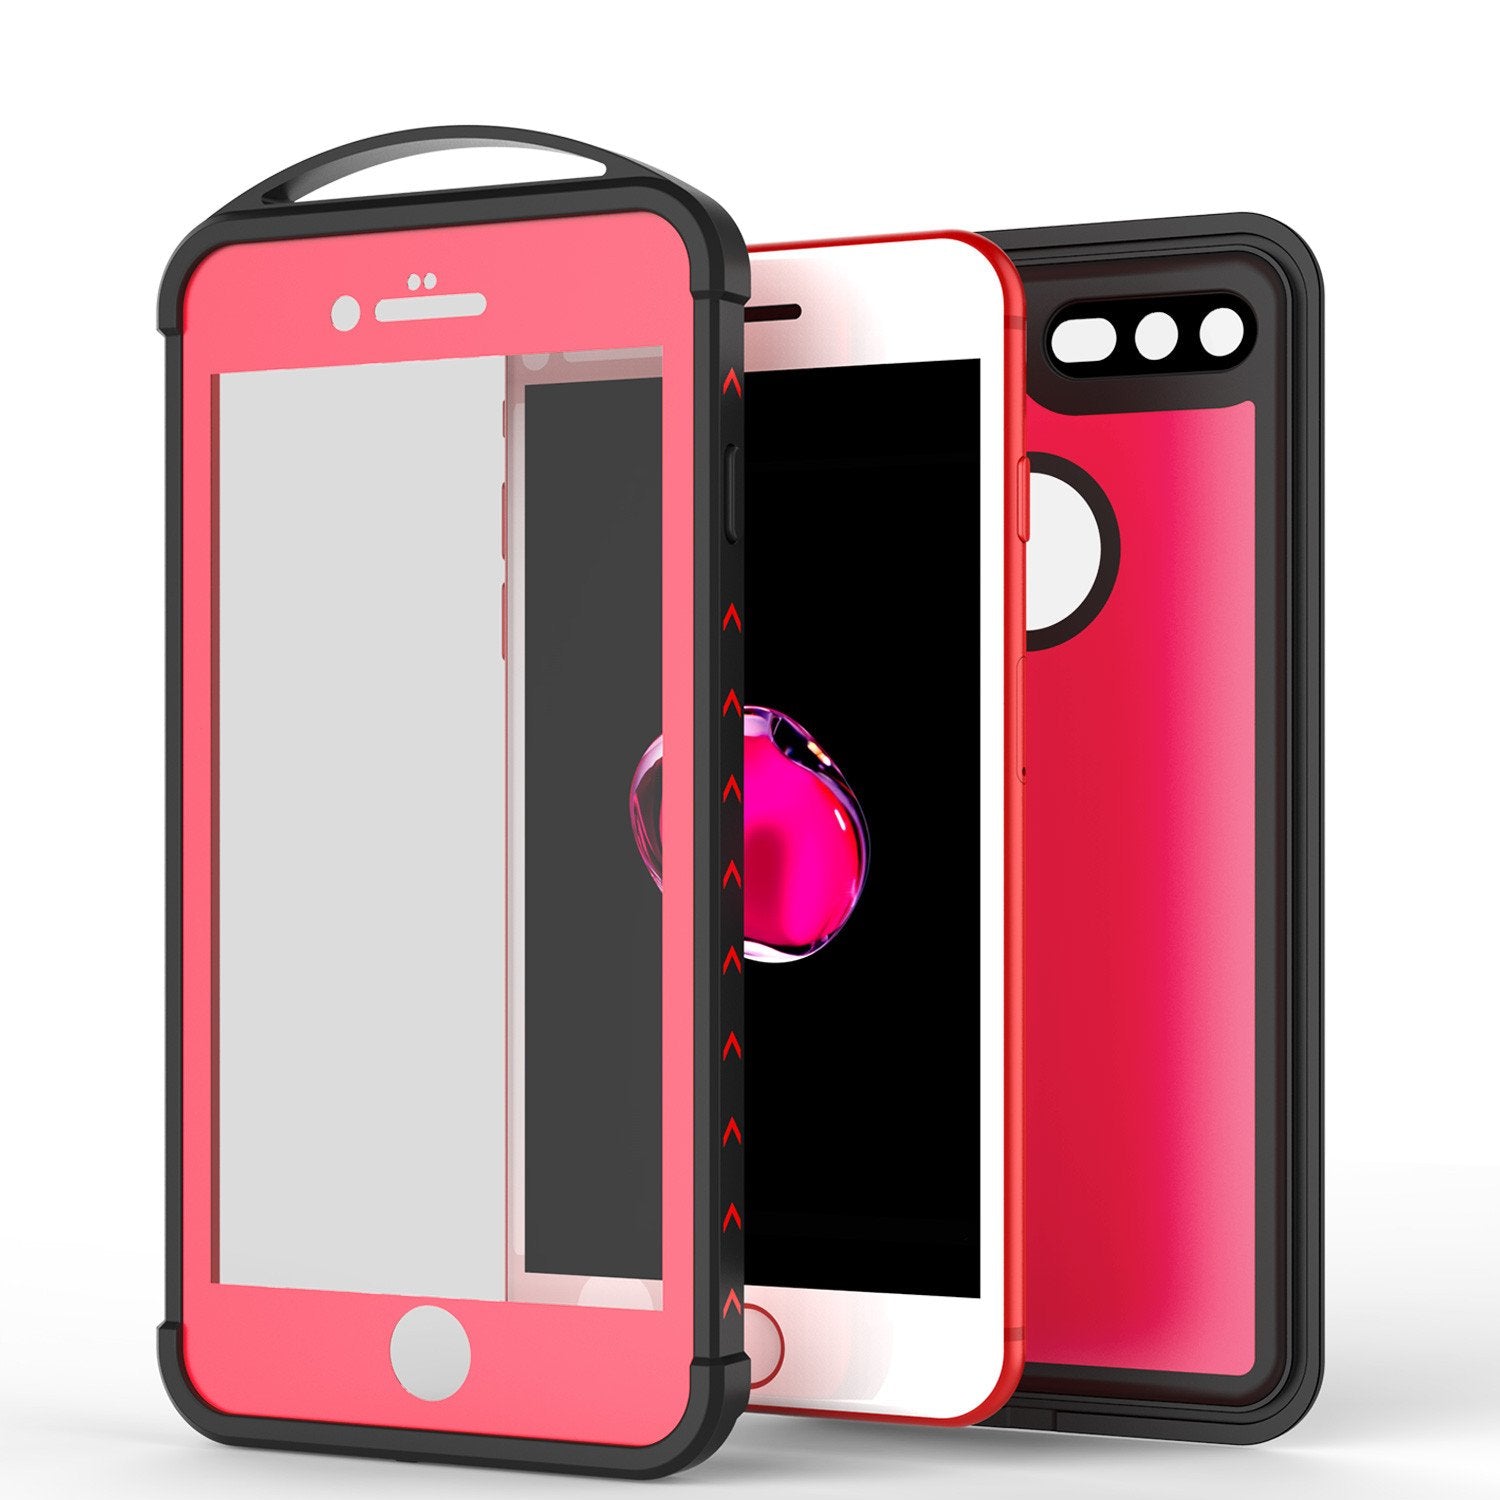 iPhone 7+ Plus Waterproof Case, Punkcase ALPINE Series, Pink | Heavy Duty Armor Cover